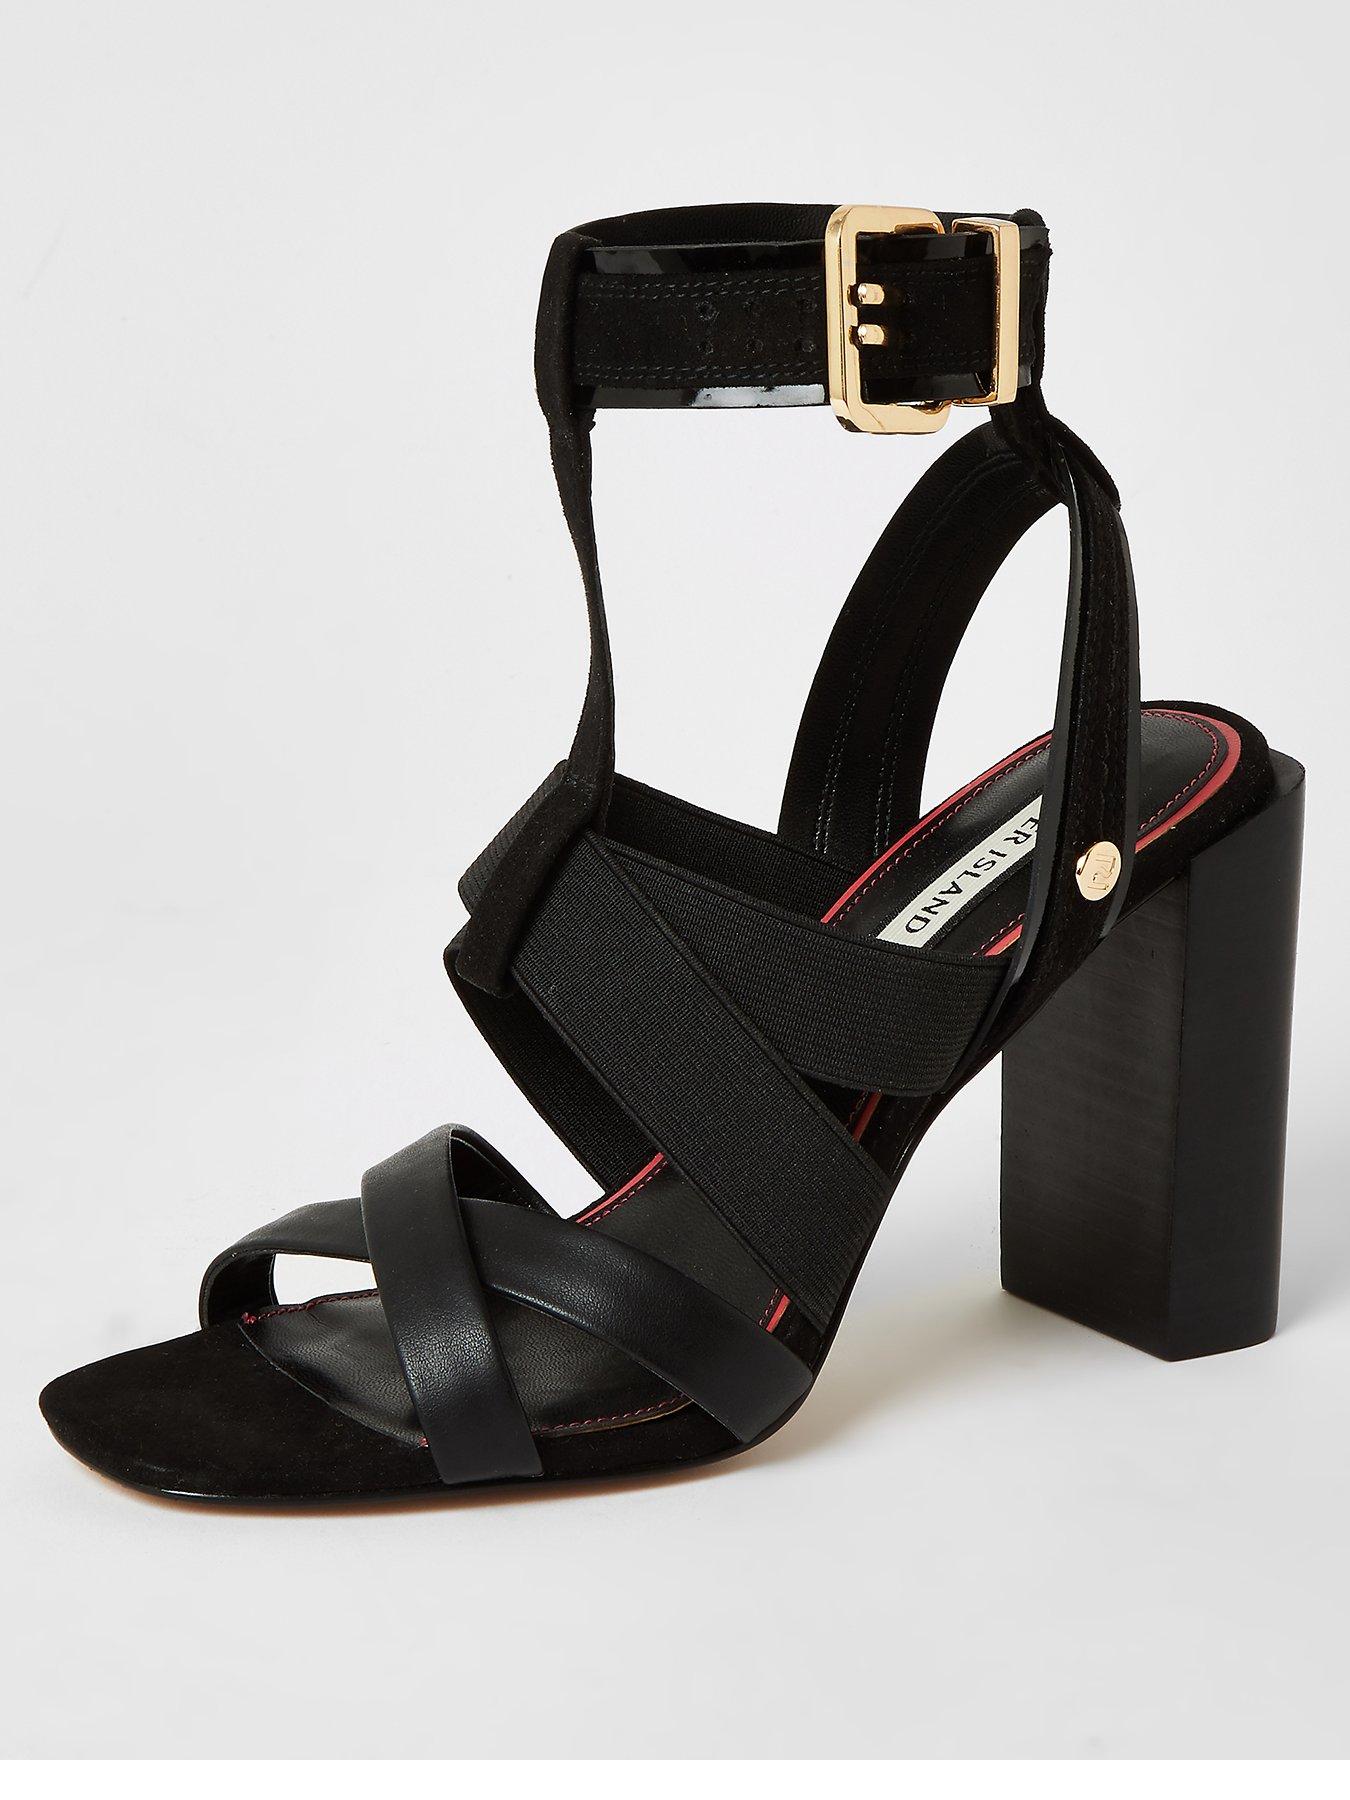 black strappy heels 3.5 inch